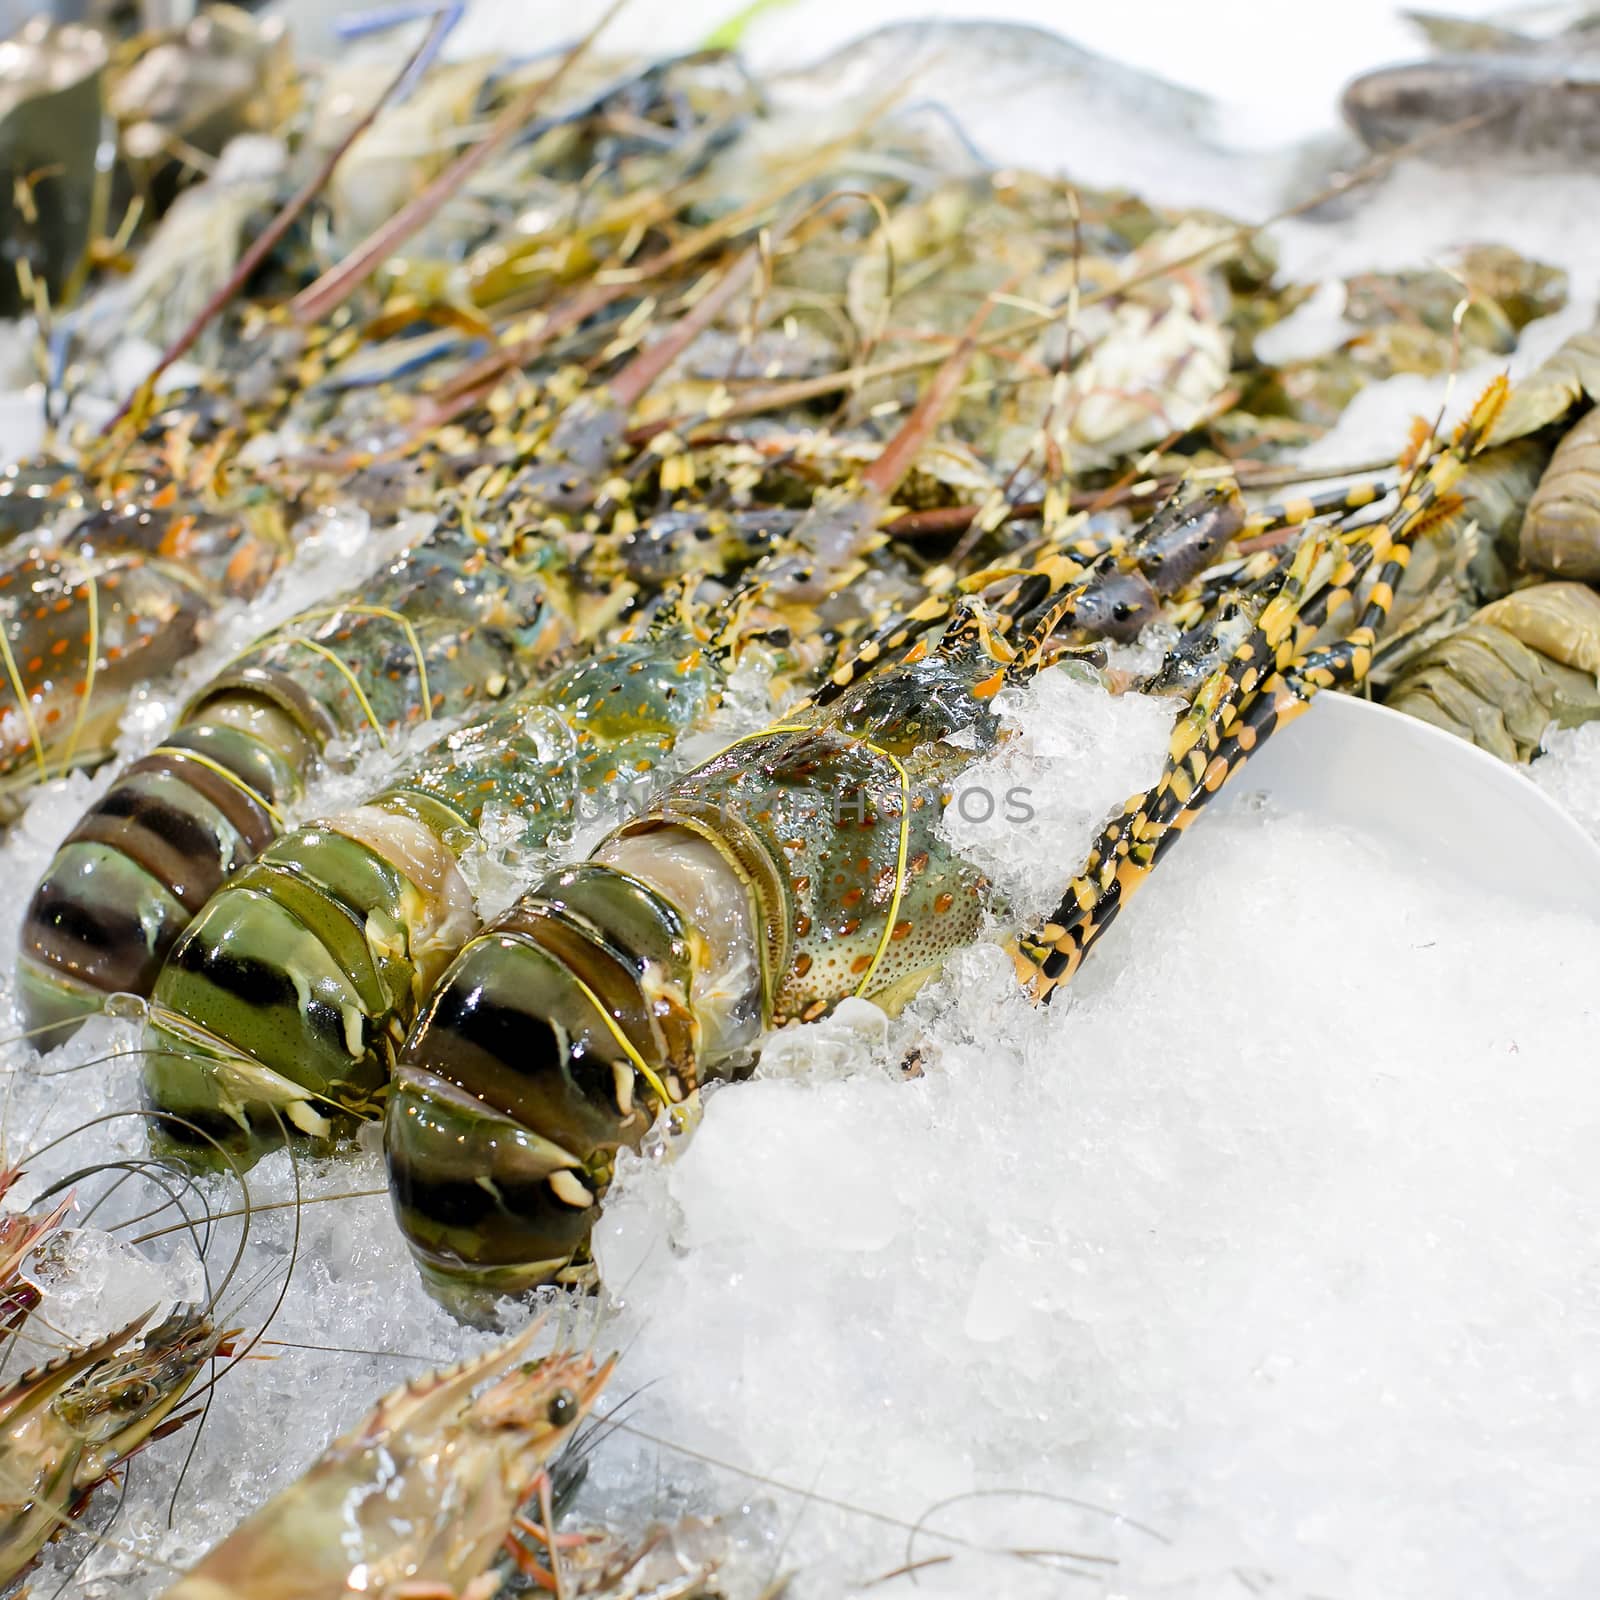 Fresh lobsters on ice